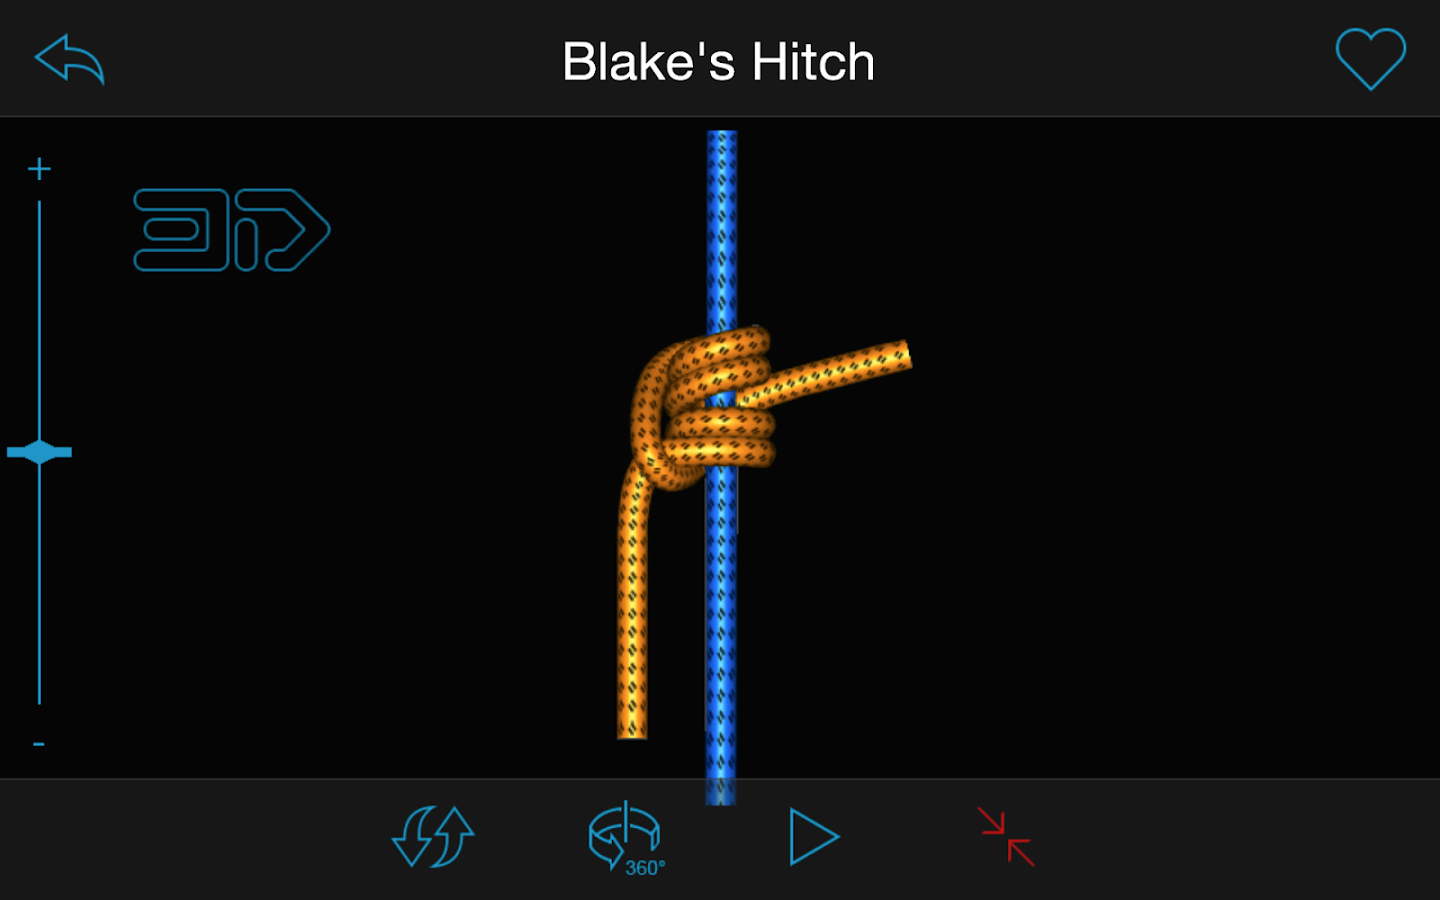    Knots 3D- screenshot  